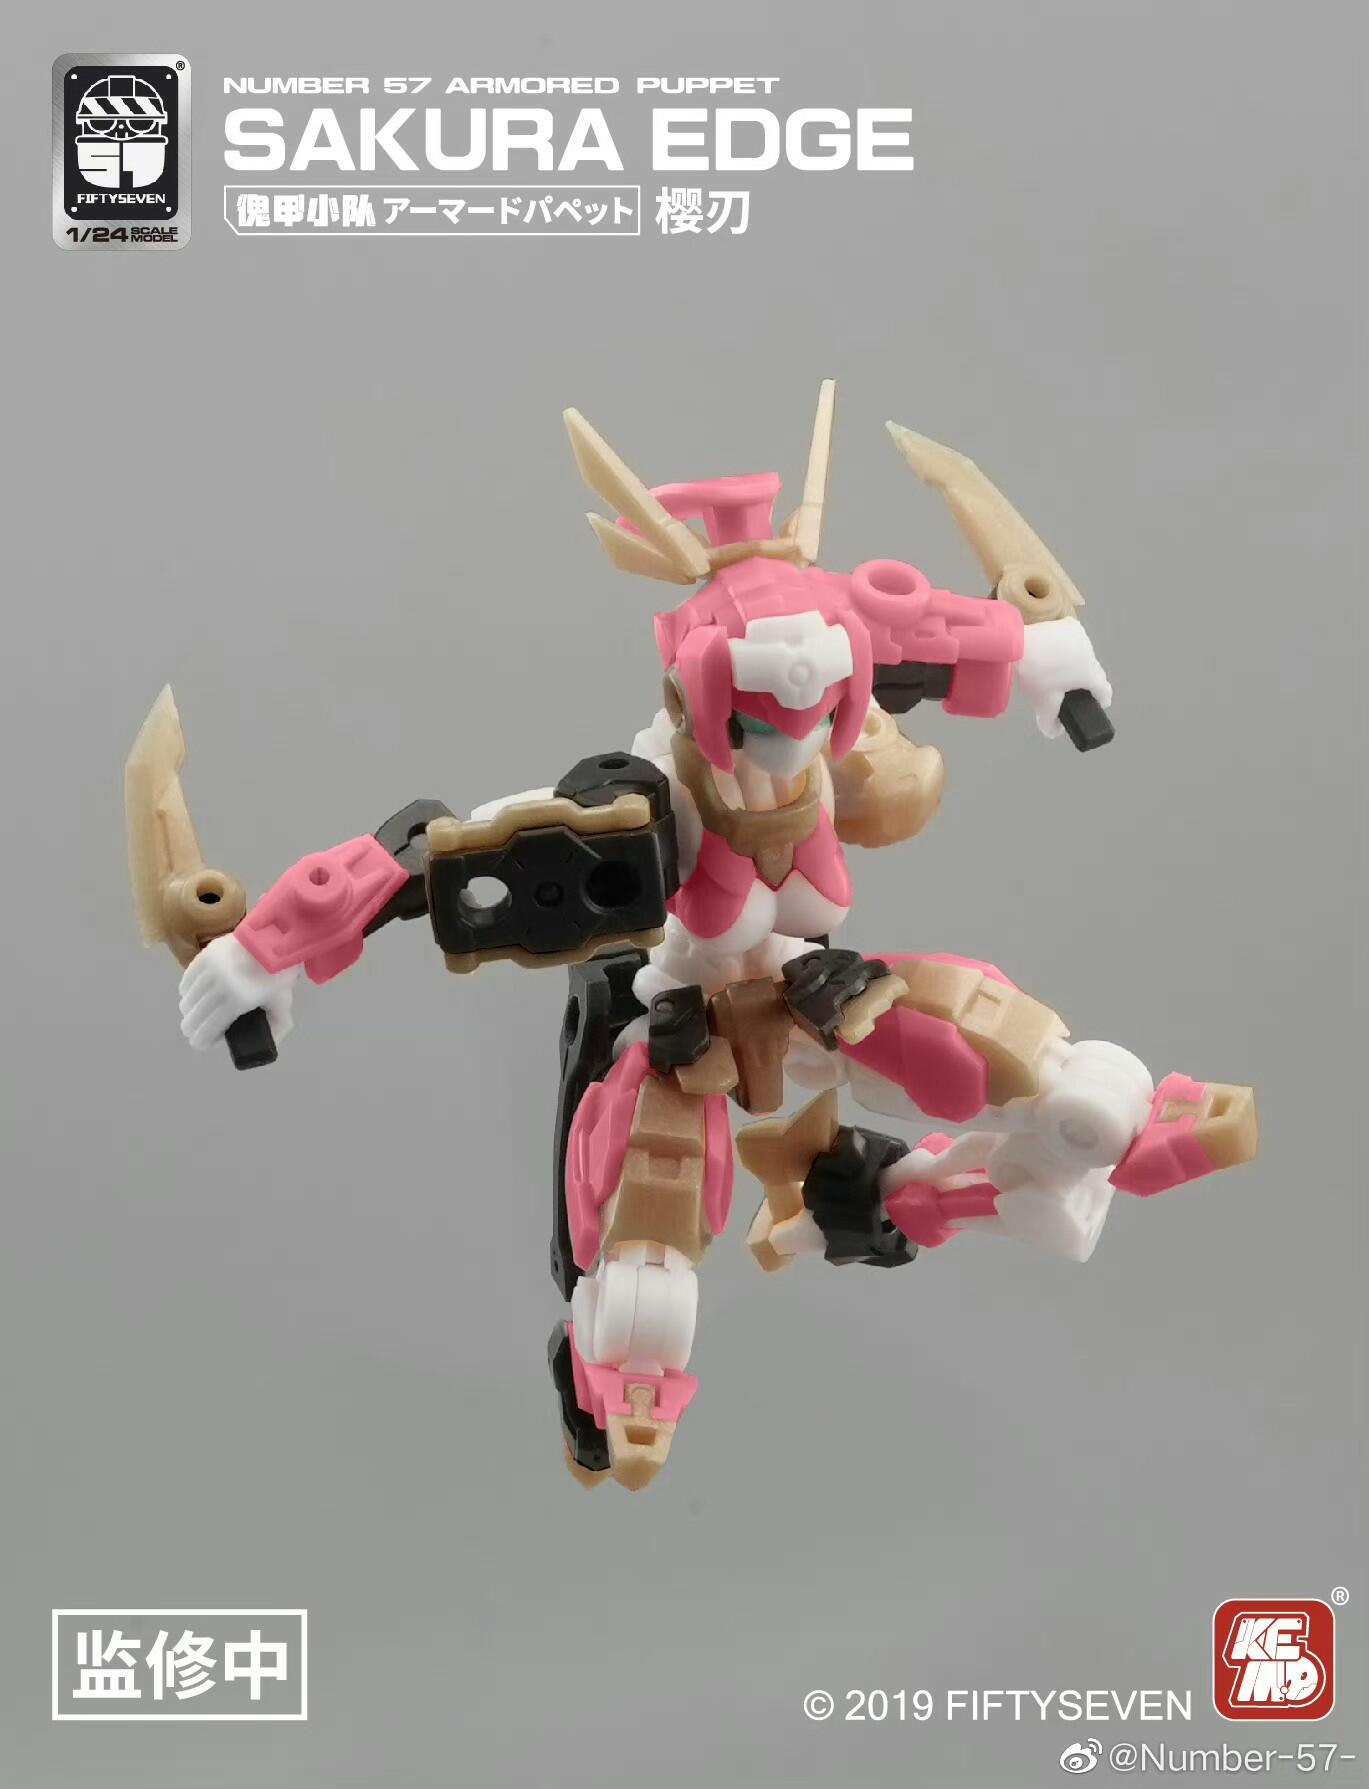 Number 57 Armored Puppet Sakura Edge